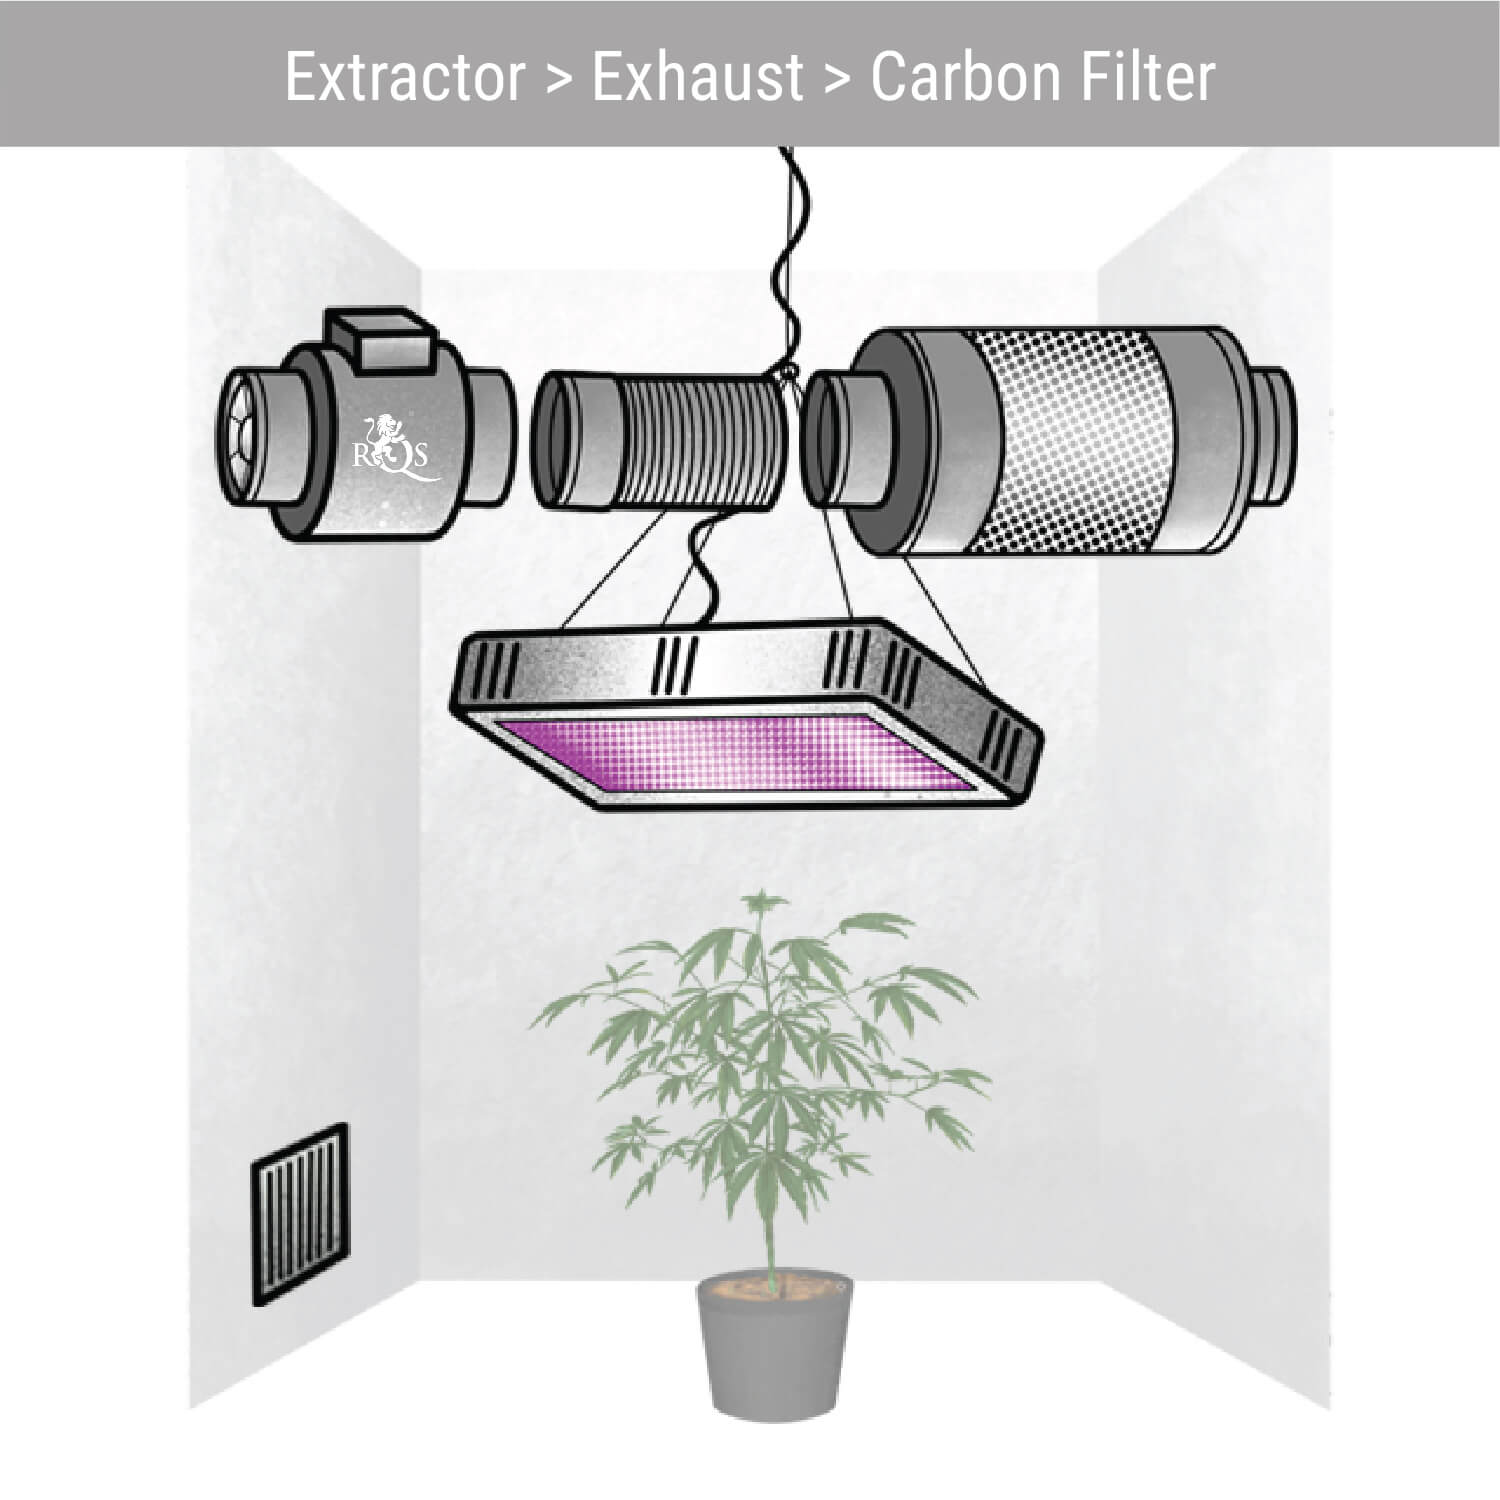 Extractor > Exhaust > Carbon Filter